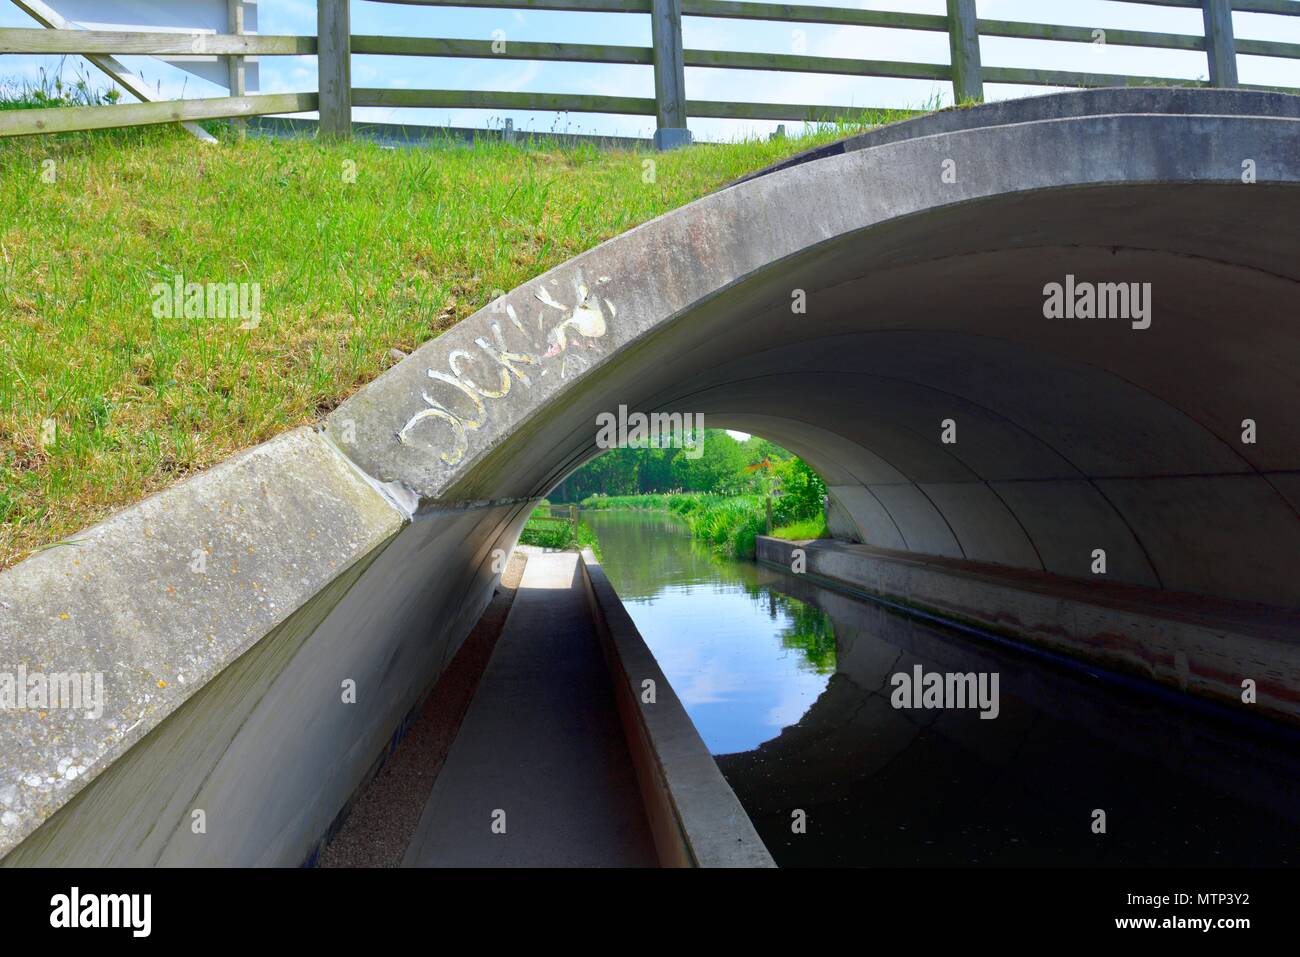 Kanal Boot bogenförmige Brücke unterführung Mercia Marina Lee Derbyshire England Großbritannien Stockfoto